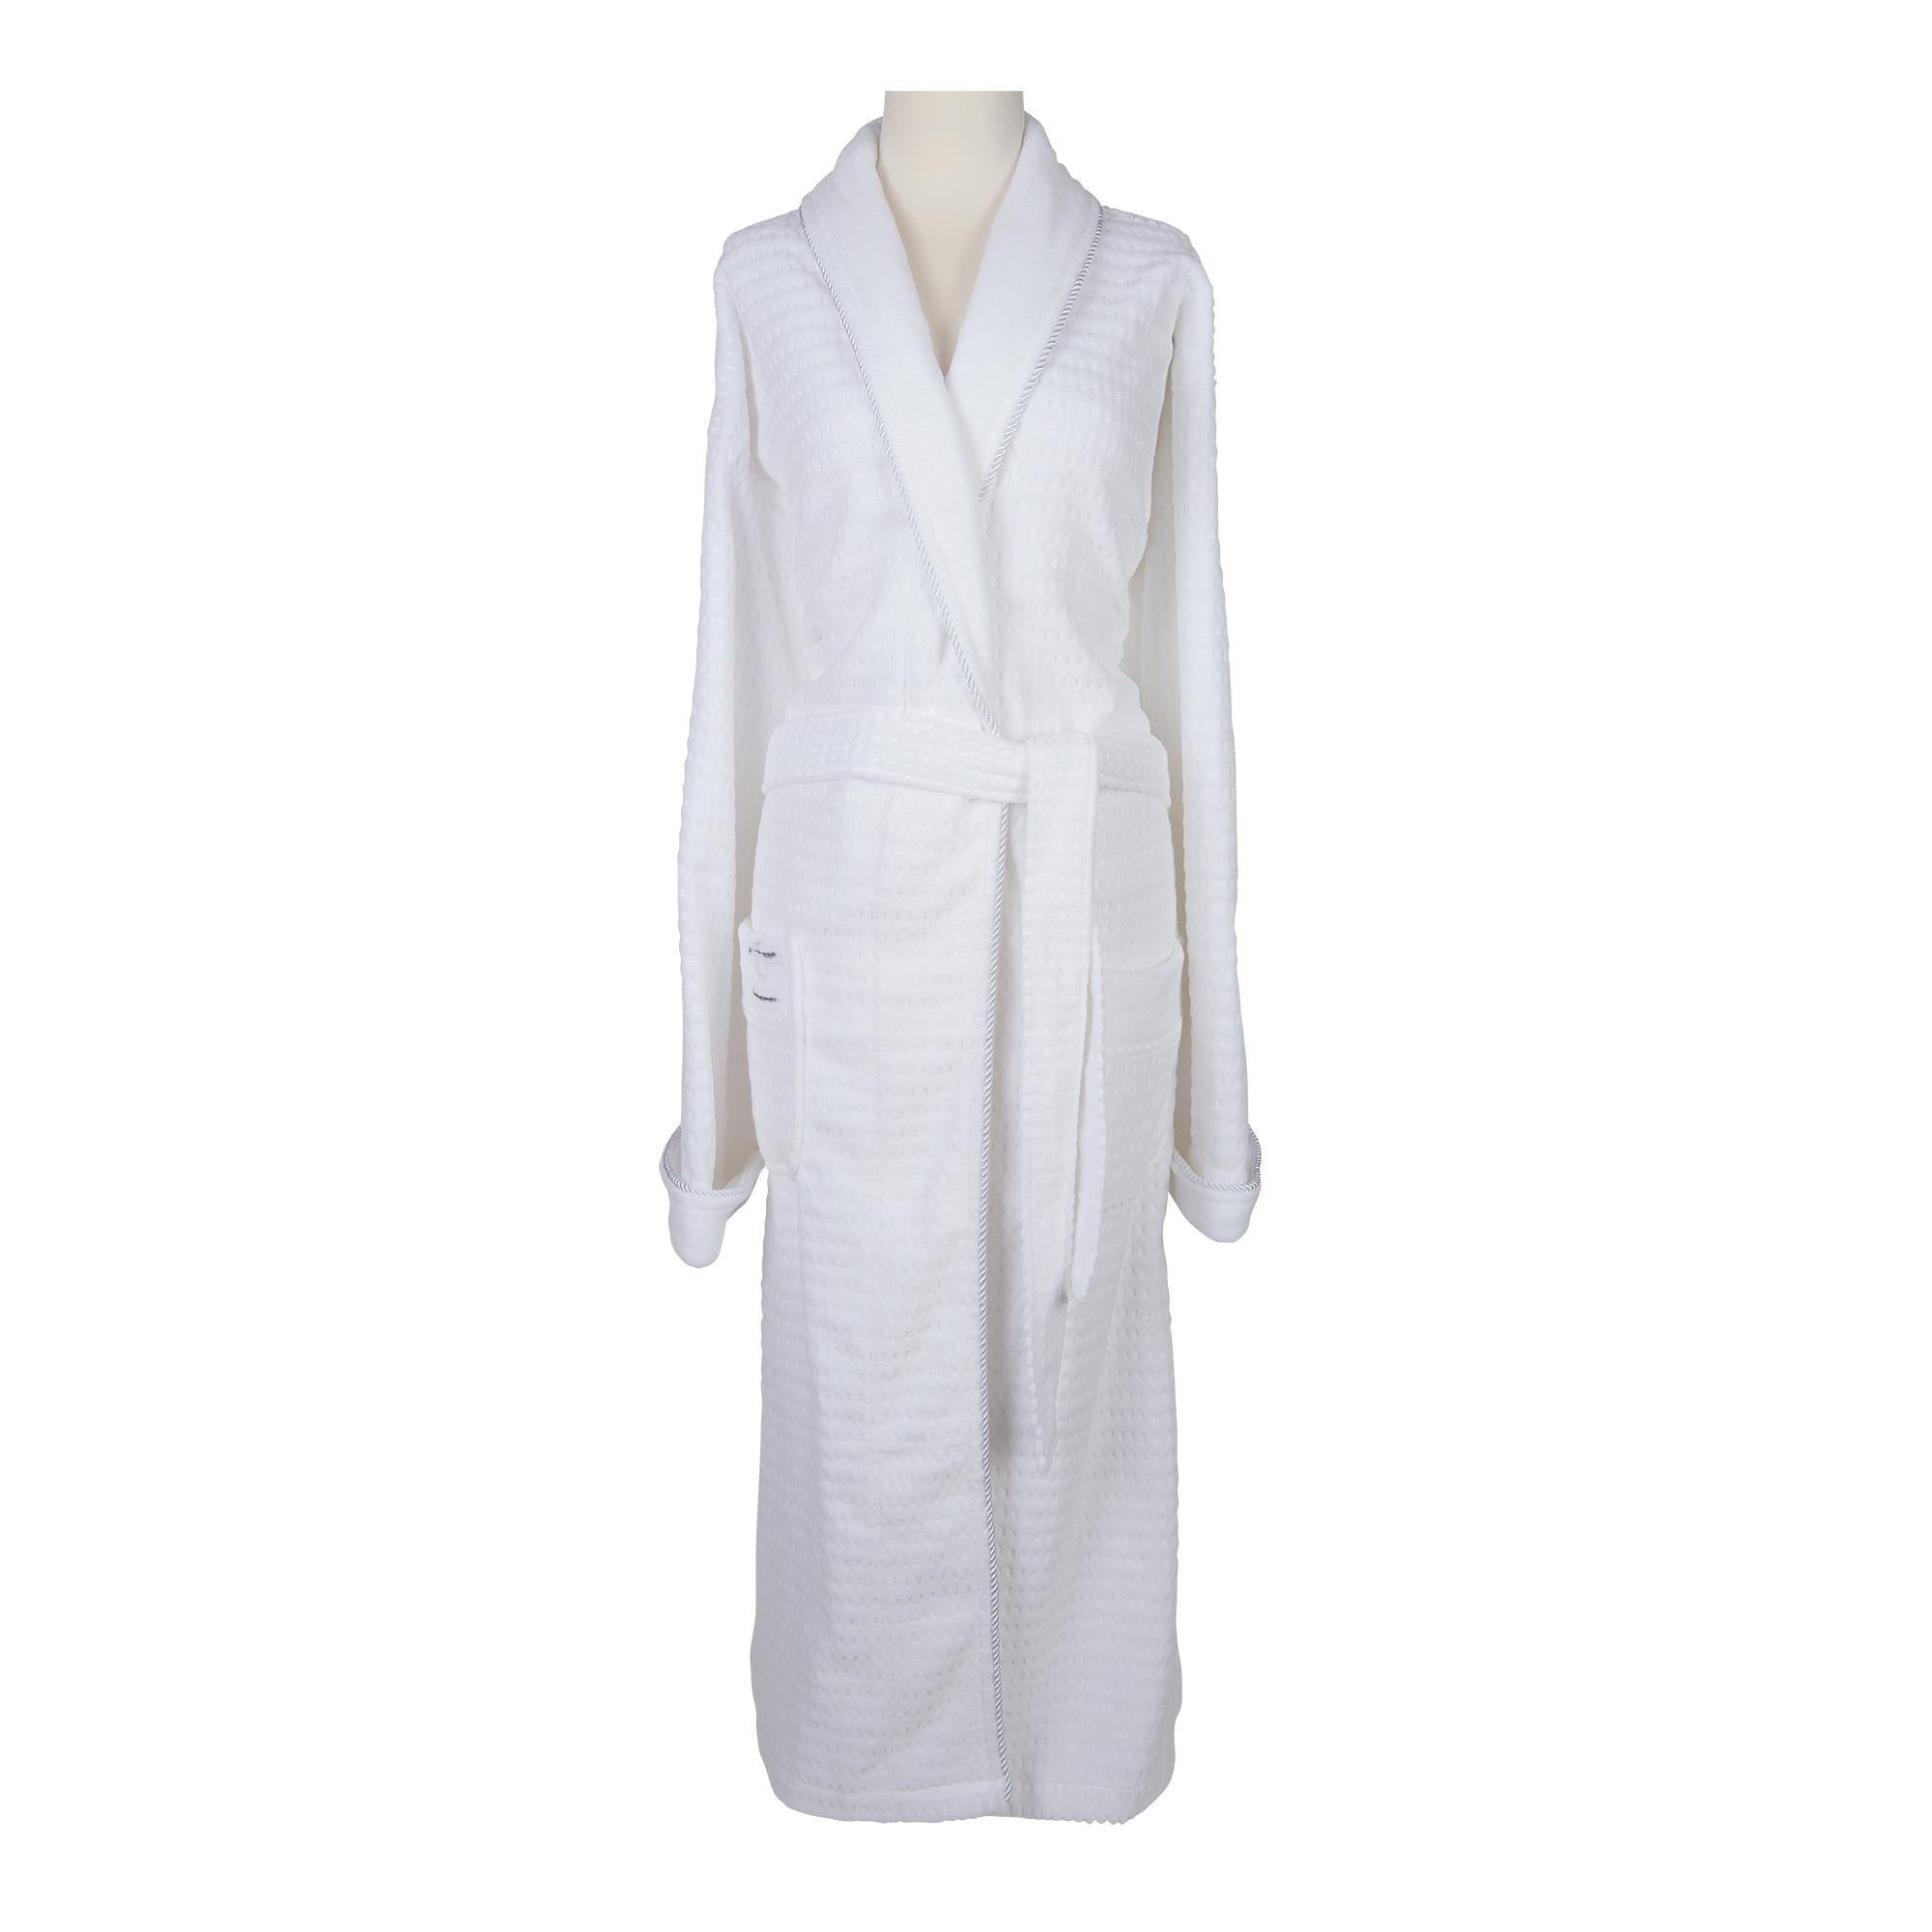 Robes & Wrapes XXL Sposh Regal Robe White with Silver Braided Trim